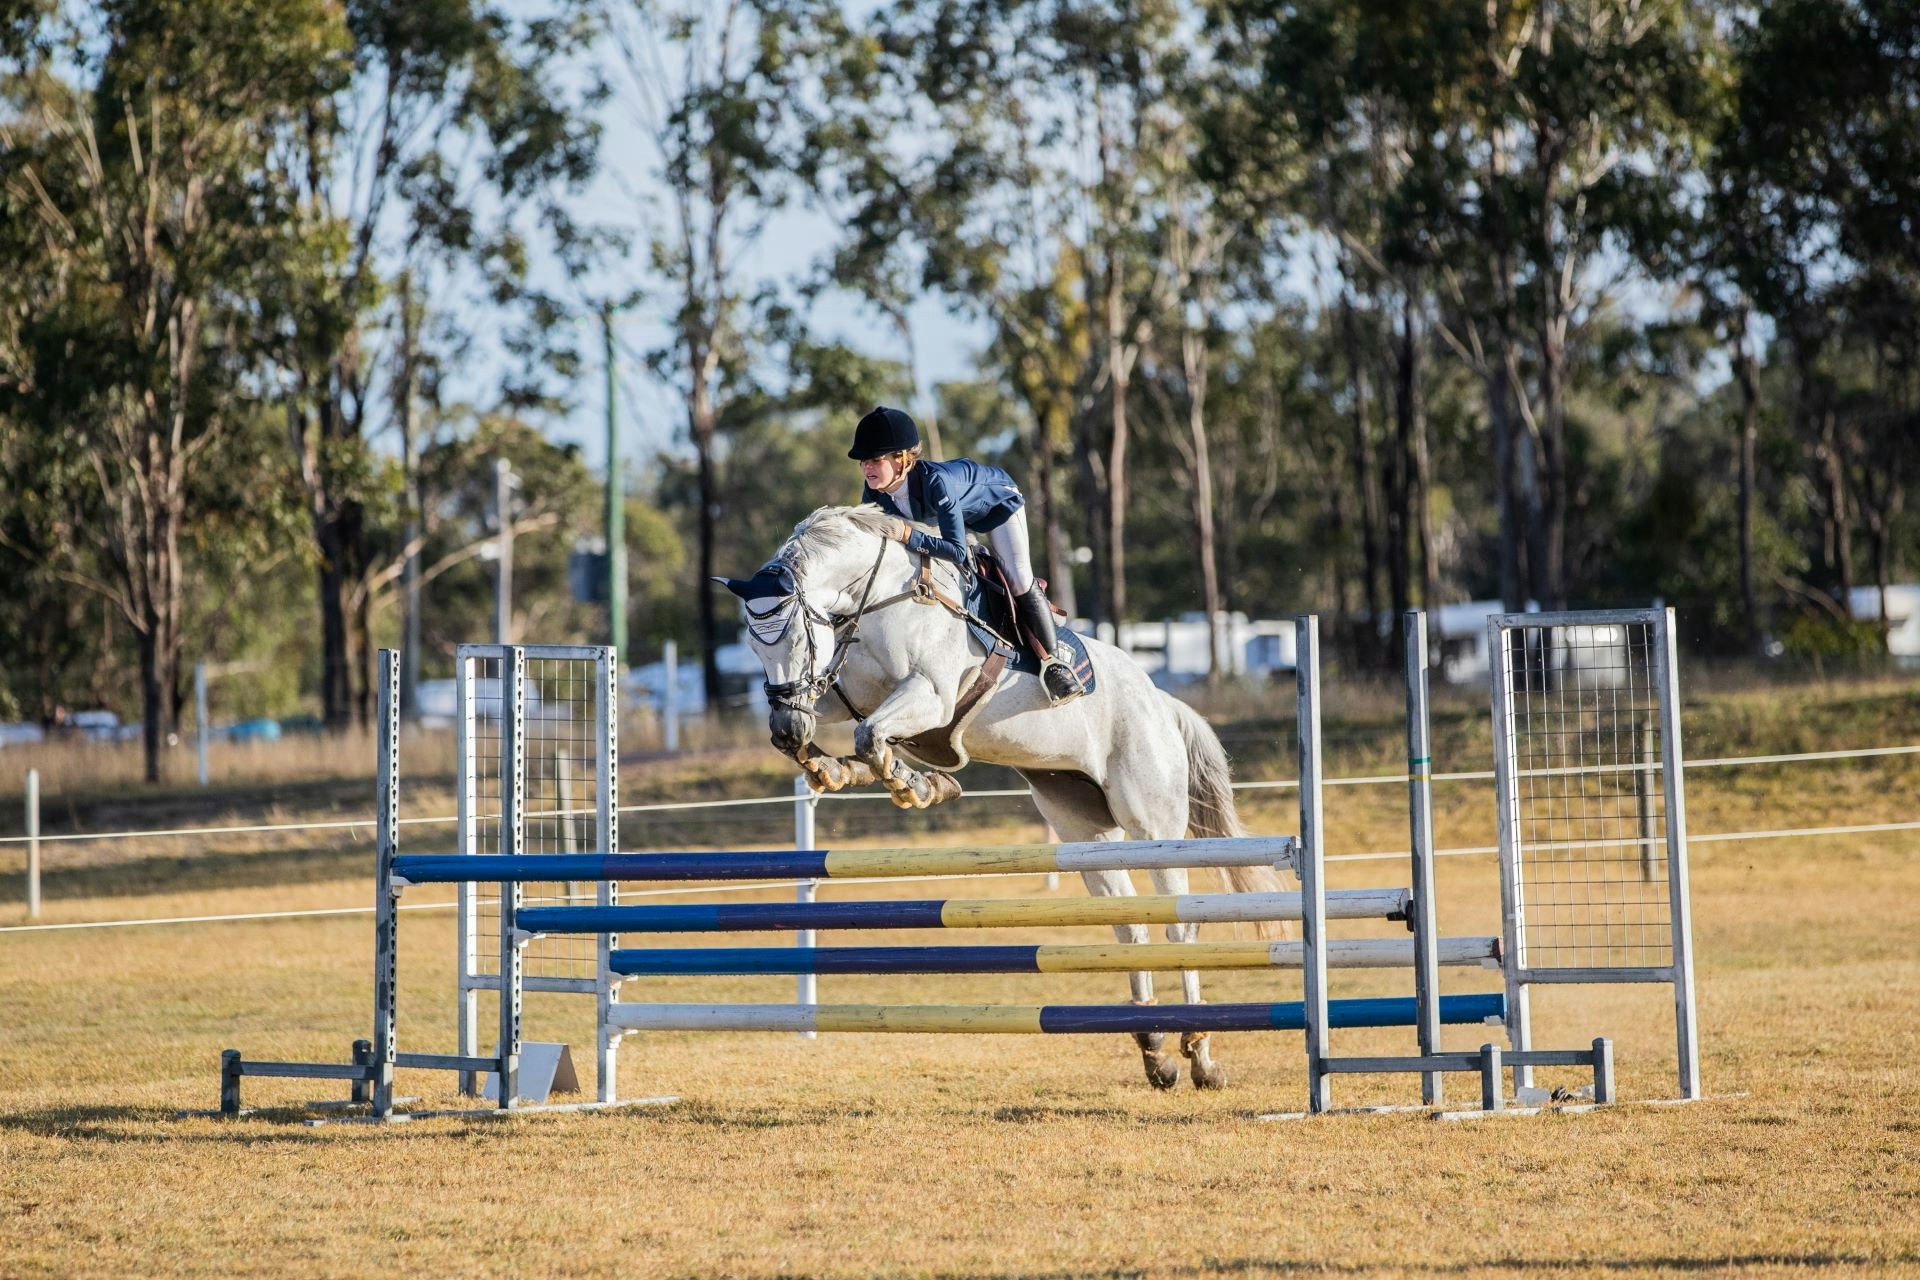 qric - horse rider jumping 